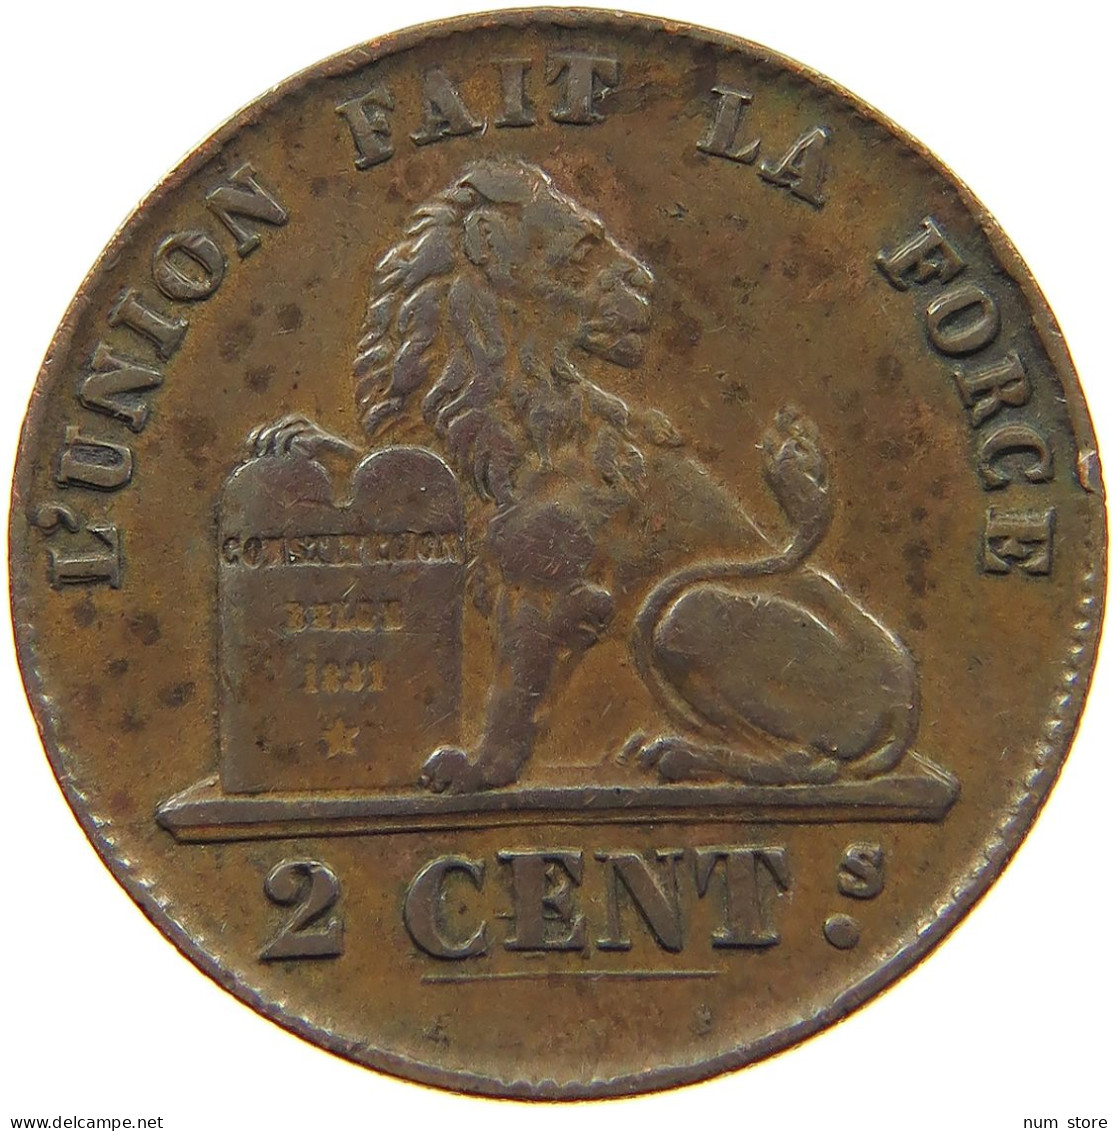 BELGIUM 2 CENTIMES 1859 LEOPOLD I. (1831-1865) DOBULE STRUCK 8 #MA 100946 - 2 Centimes